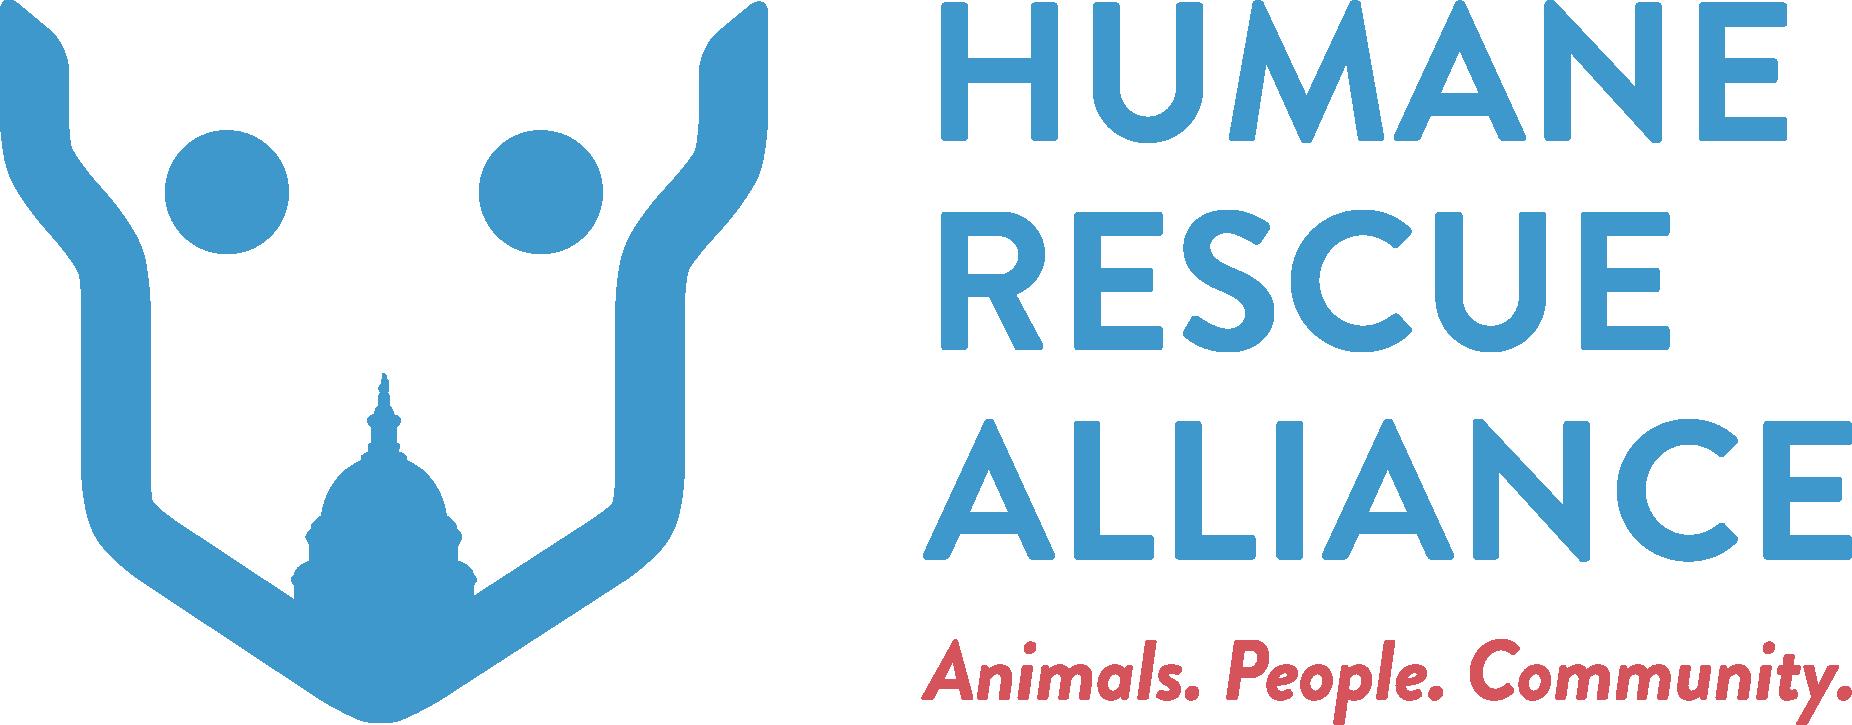 Humane rescue alliance roberto camisa emblemhealth